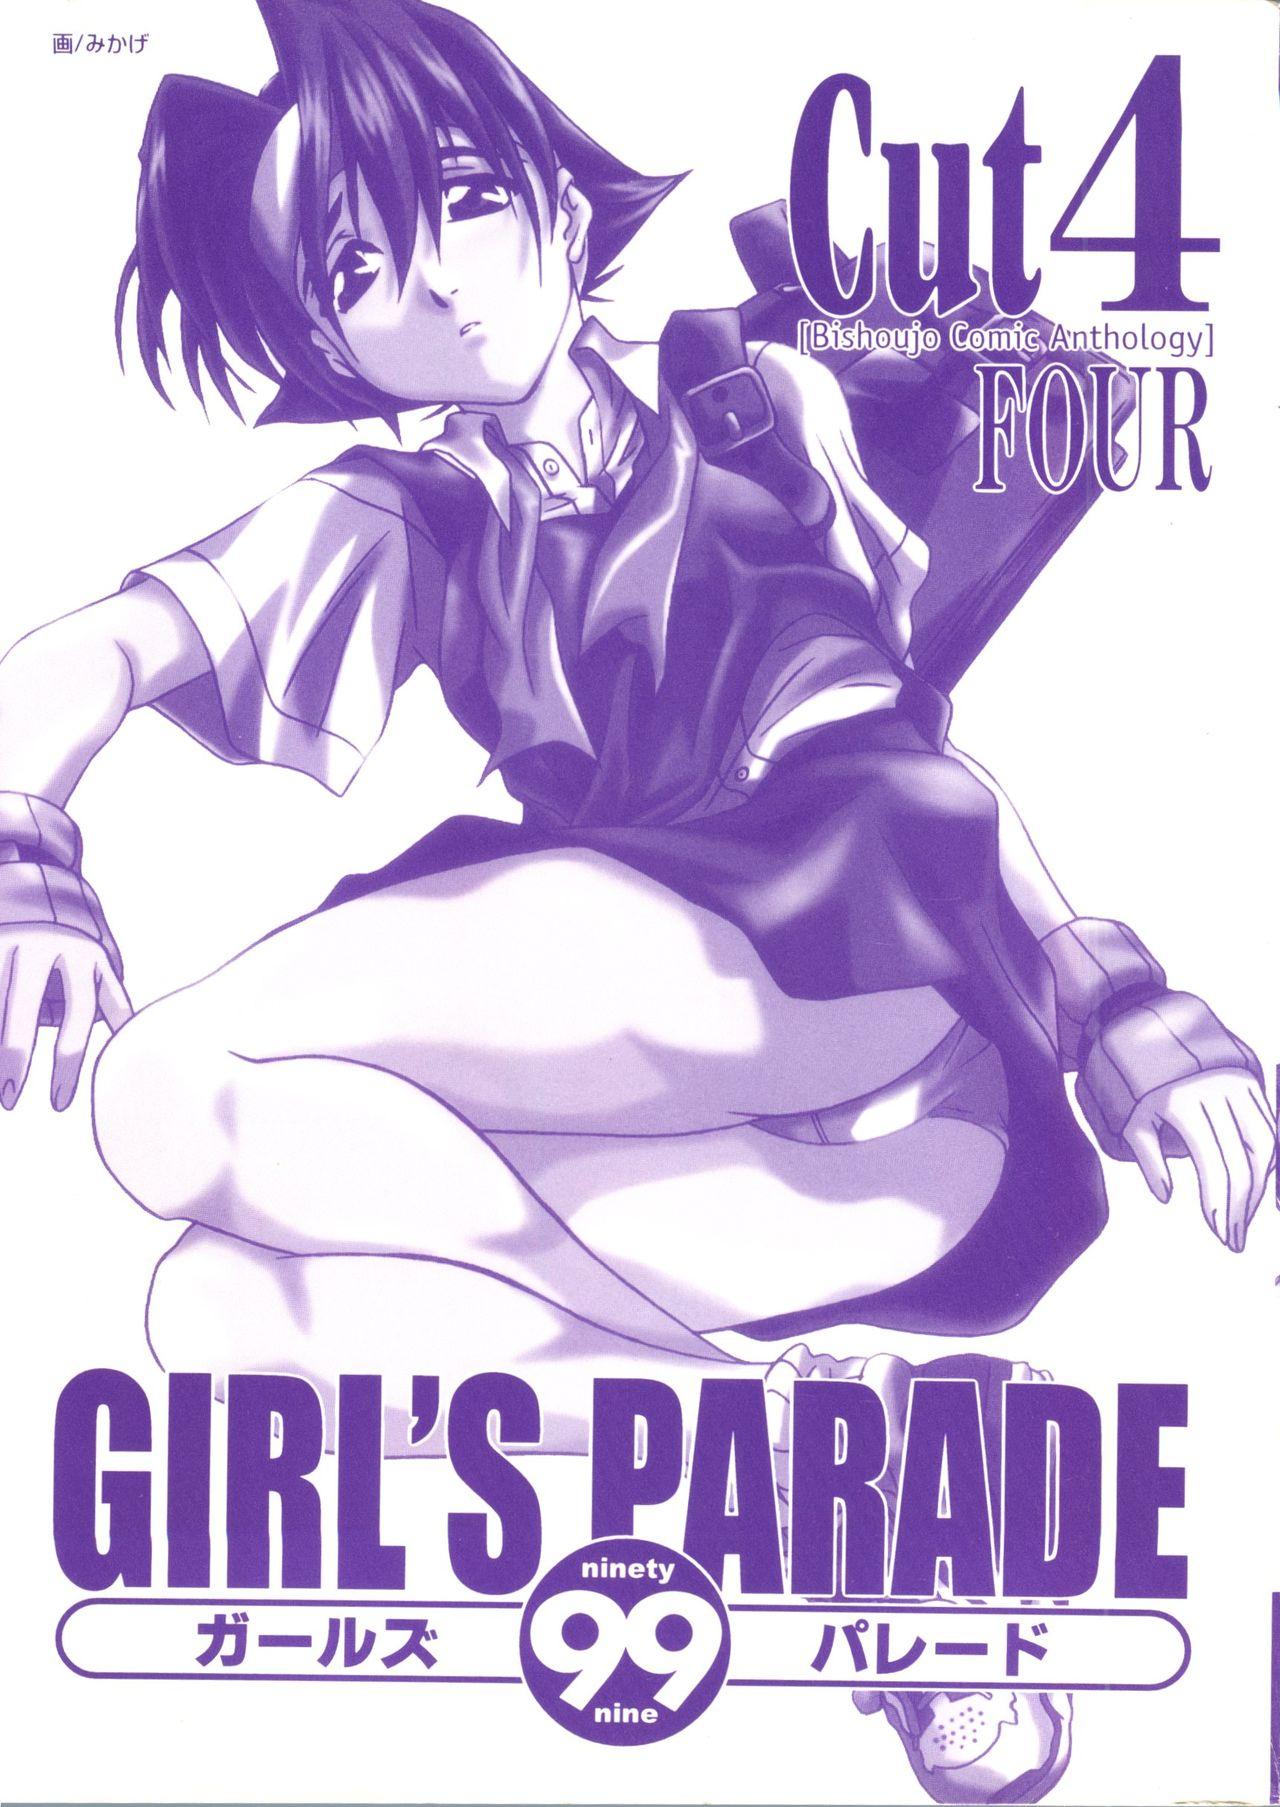 Girl's Parade 99 Cut 4 1